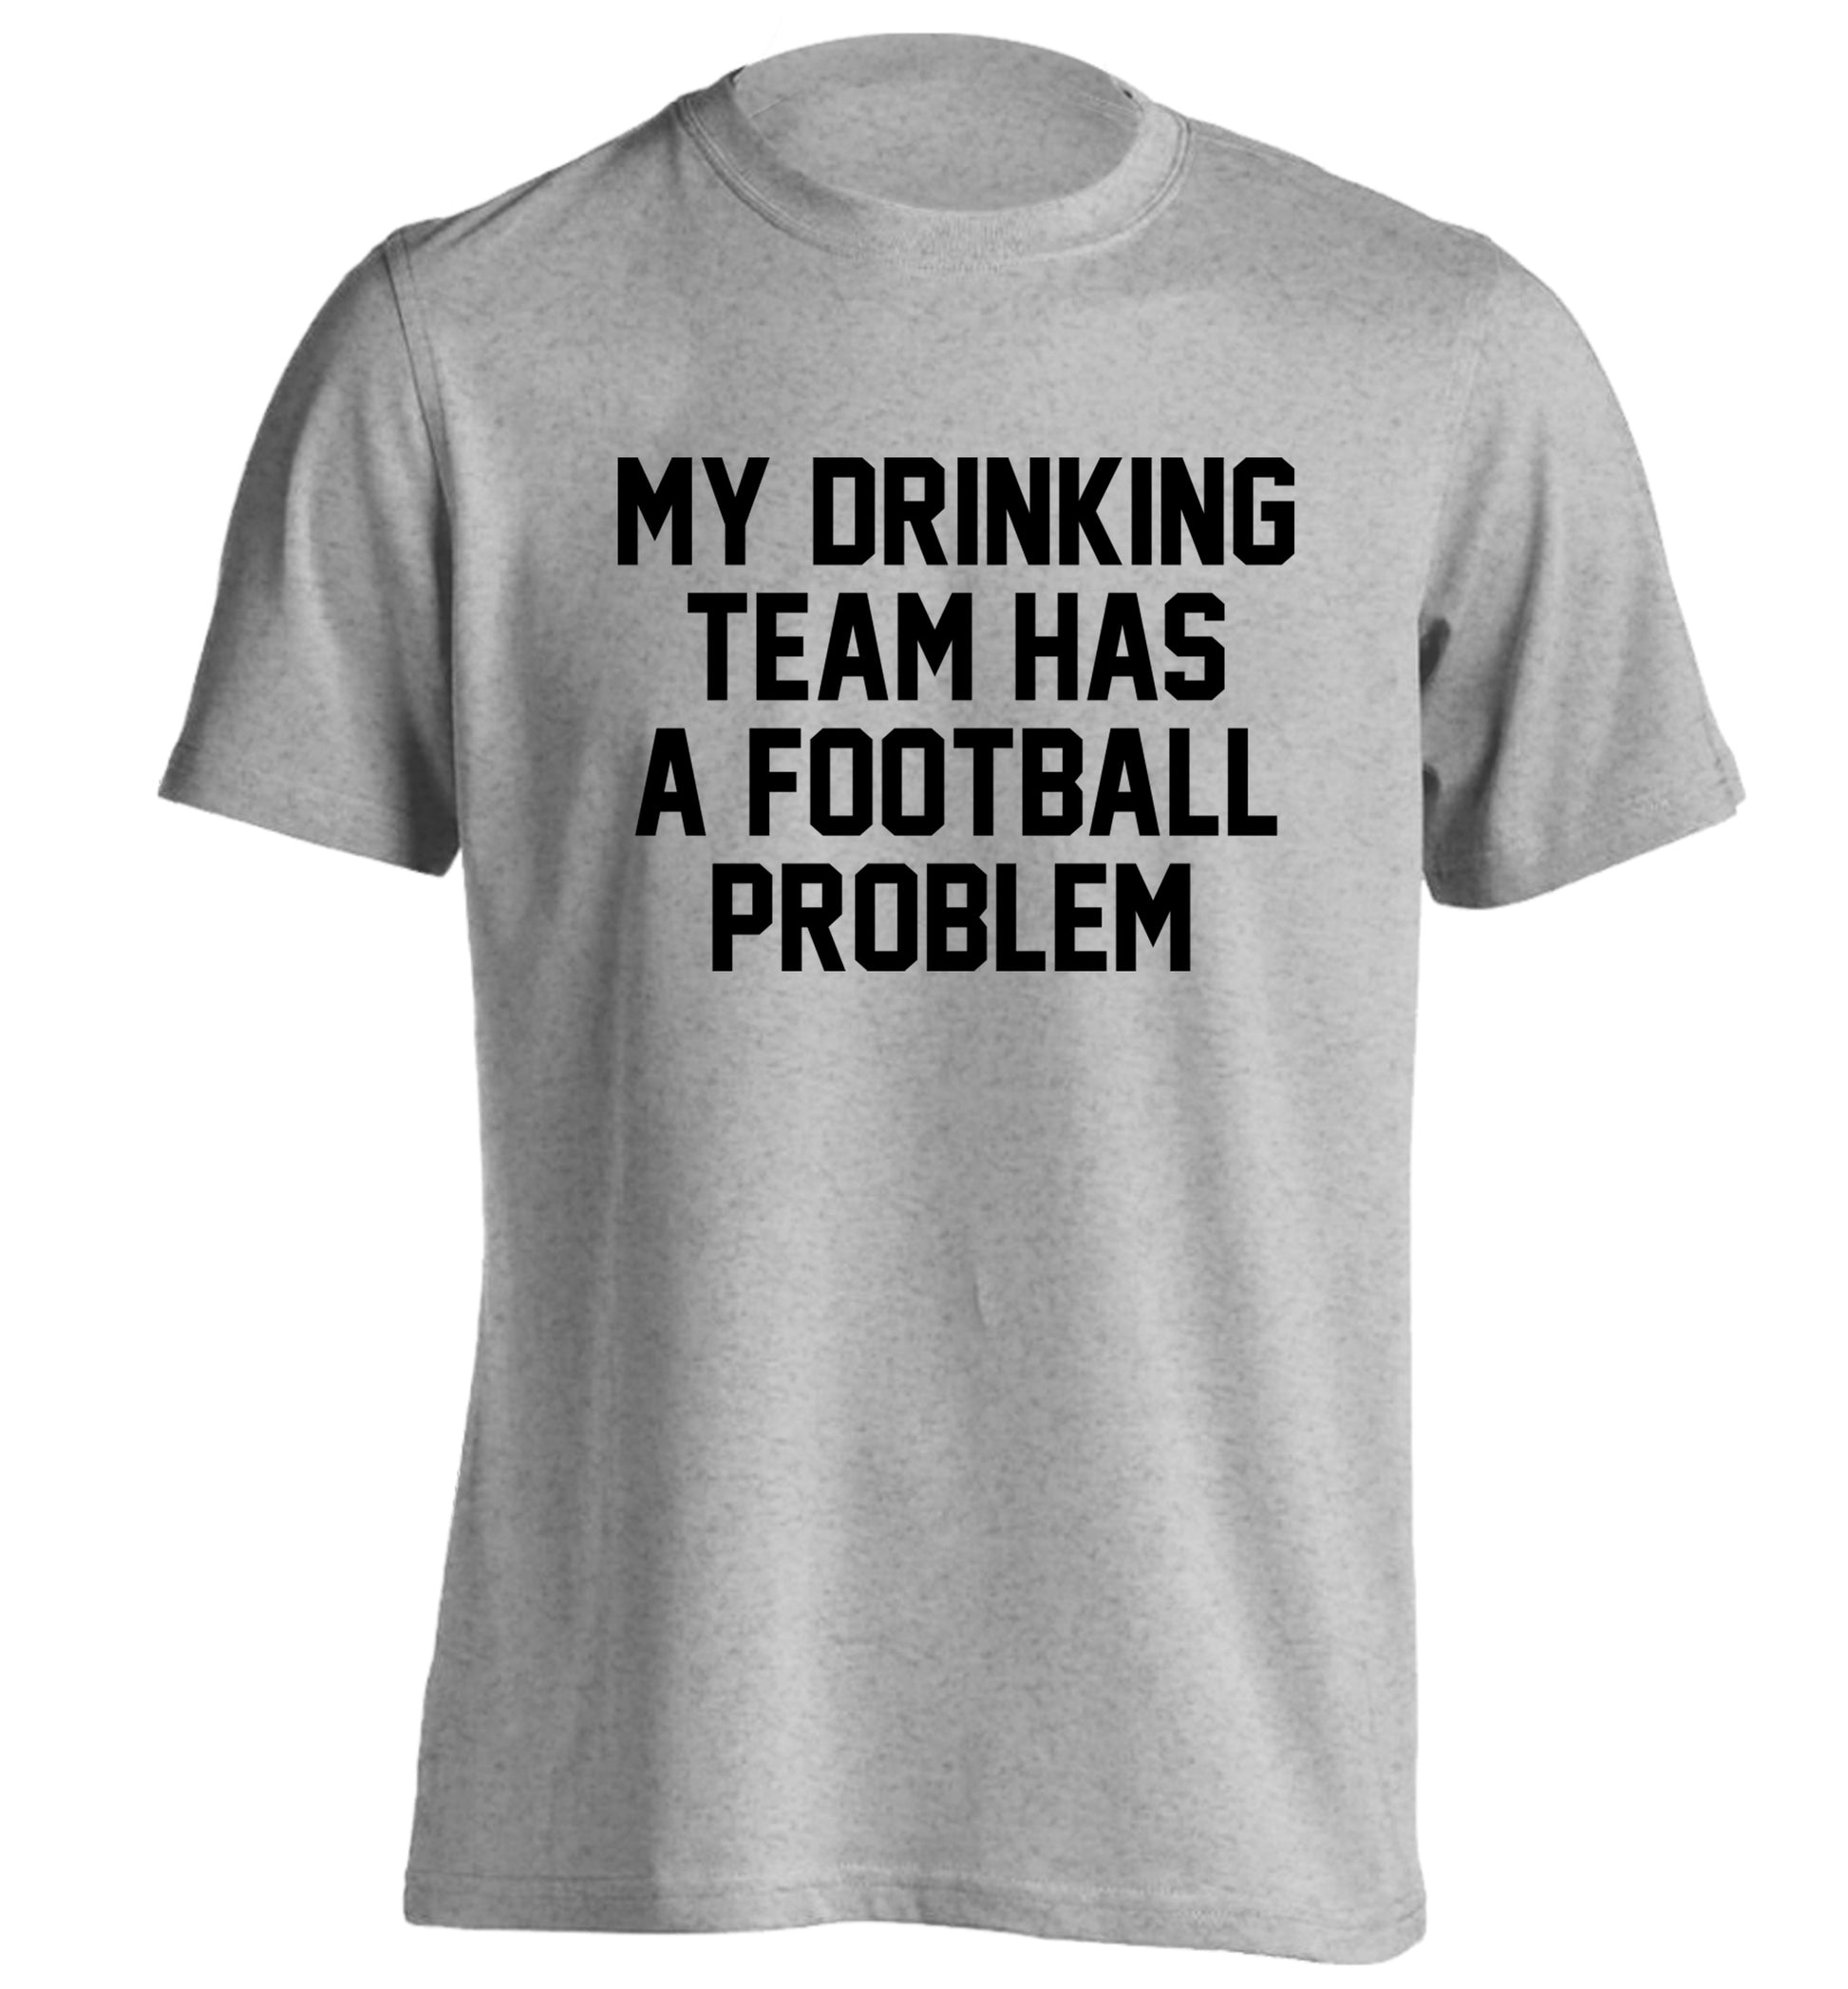 My drinking team has a football problem! adults unisexgrey Tshirt 2XL